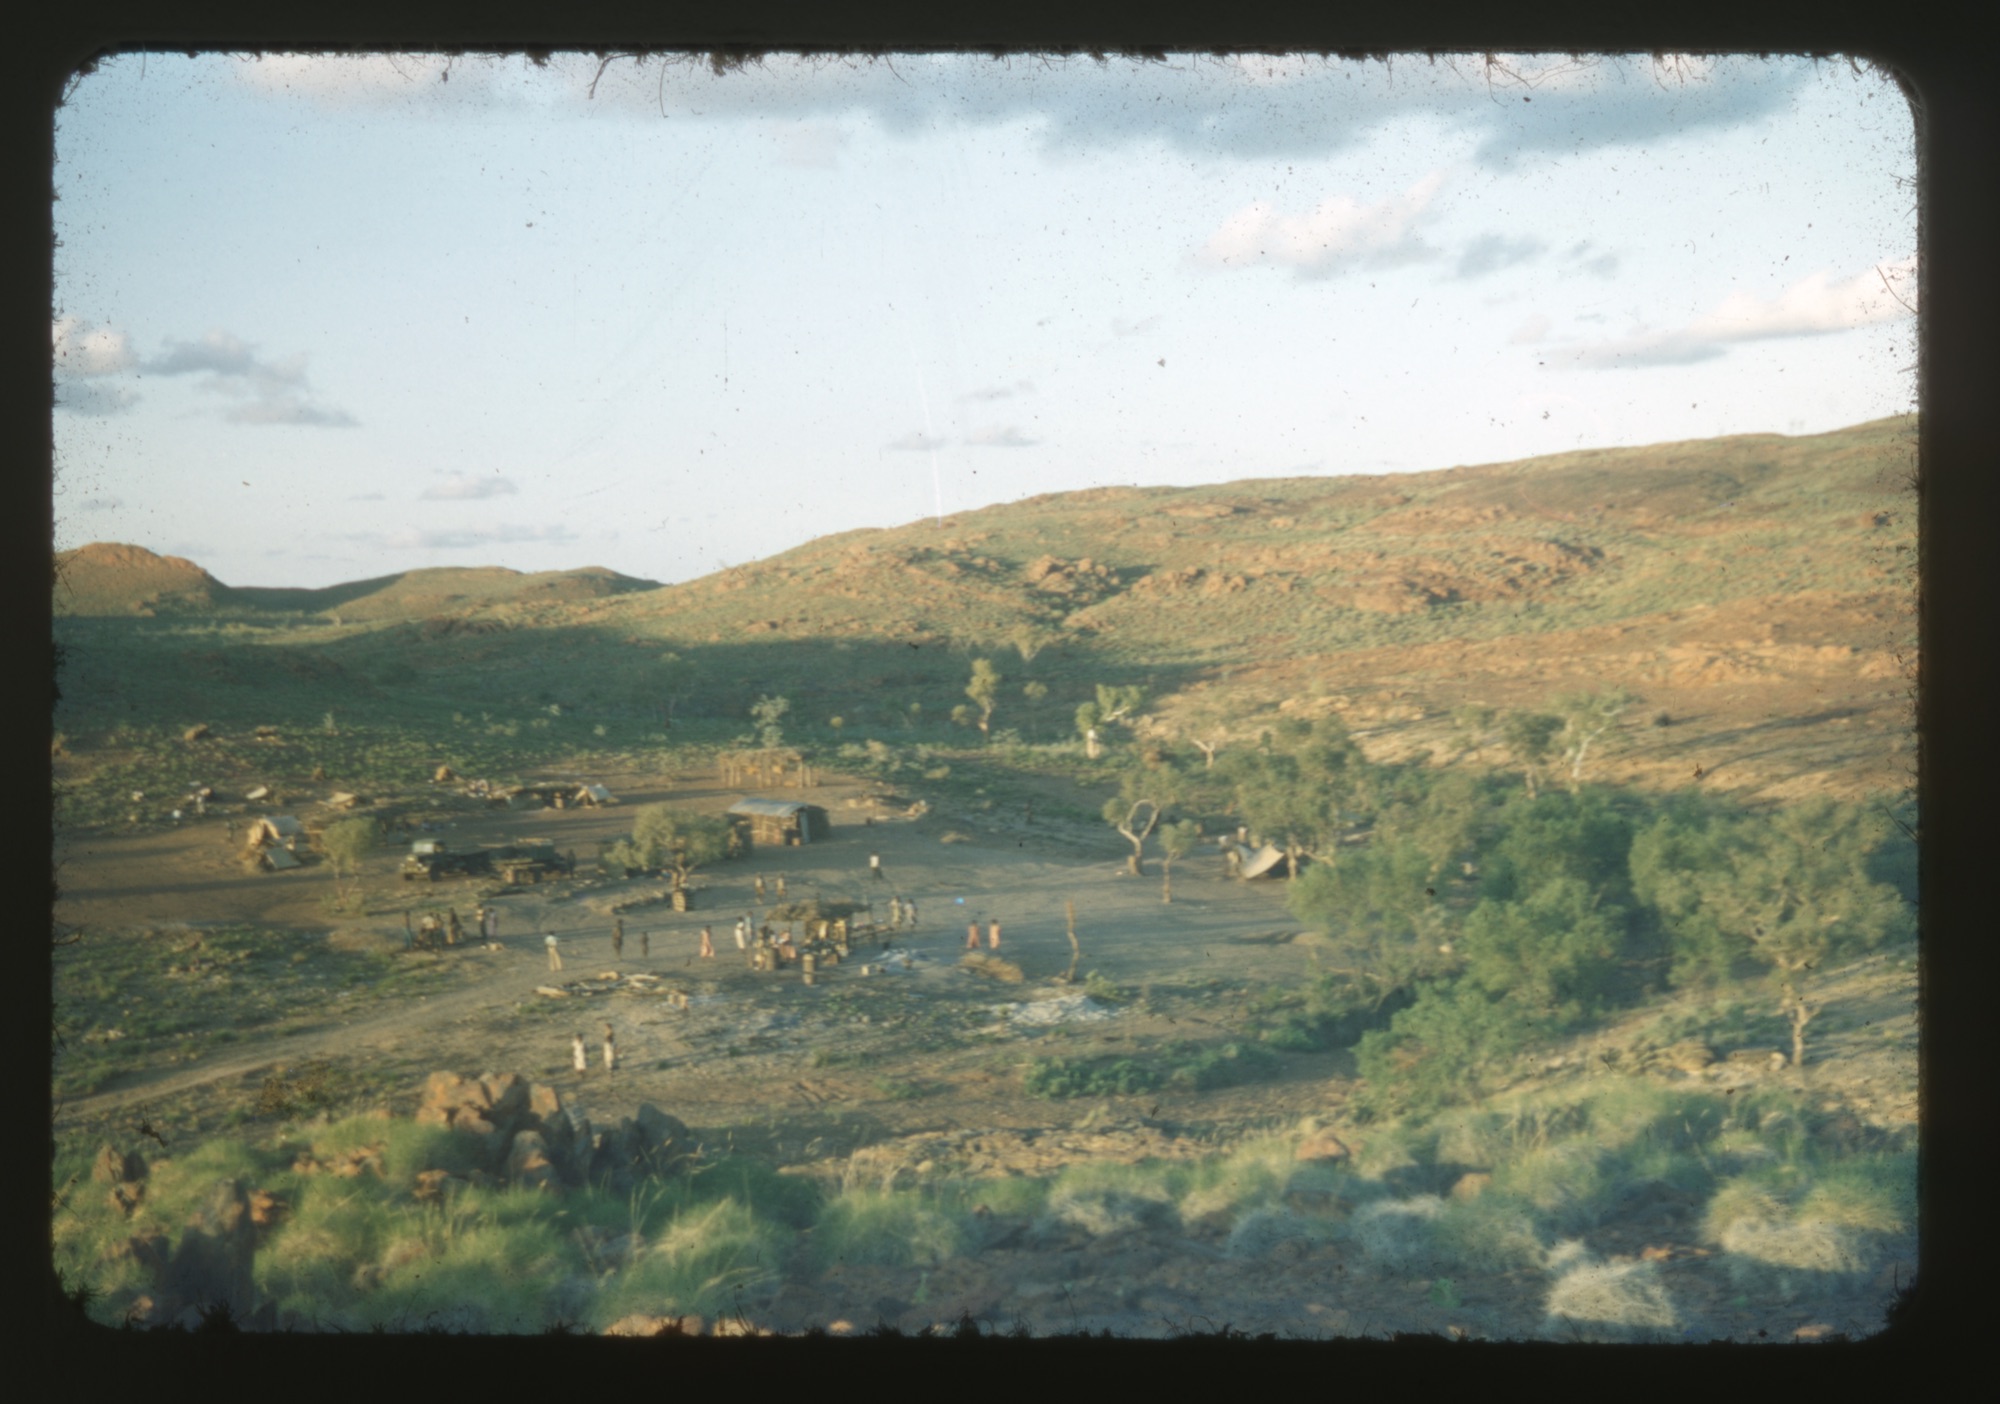 Native Mining Camp at Pilgangoora 1953